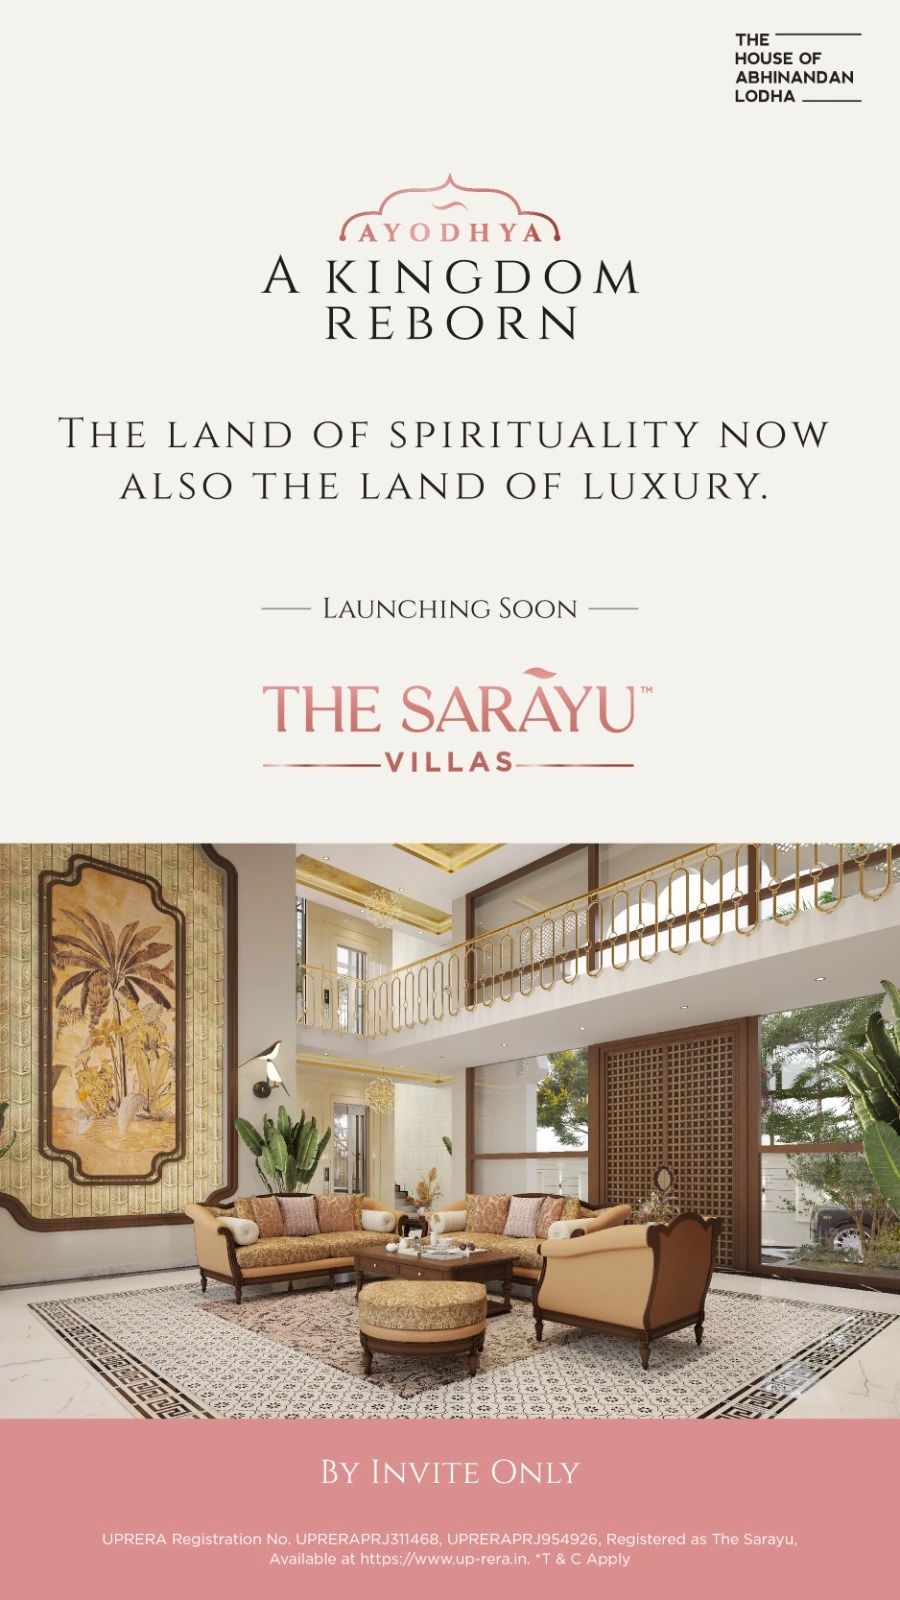 Abhinandan Lodha Presents The Sarayu Villas: Luxury Redefined in the Rejuvenated Kingdom of Ayodhya Update